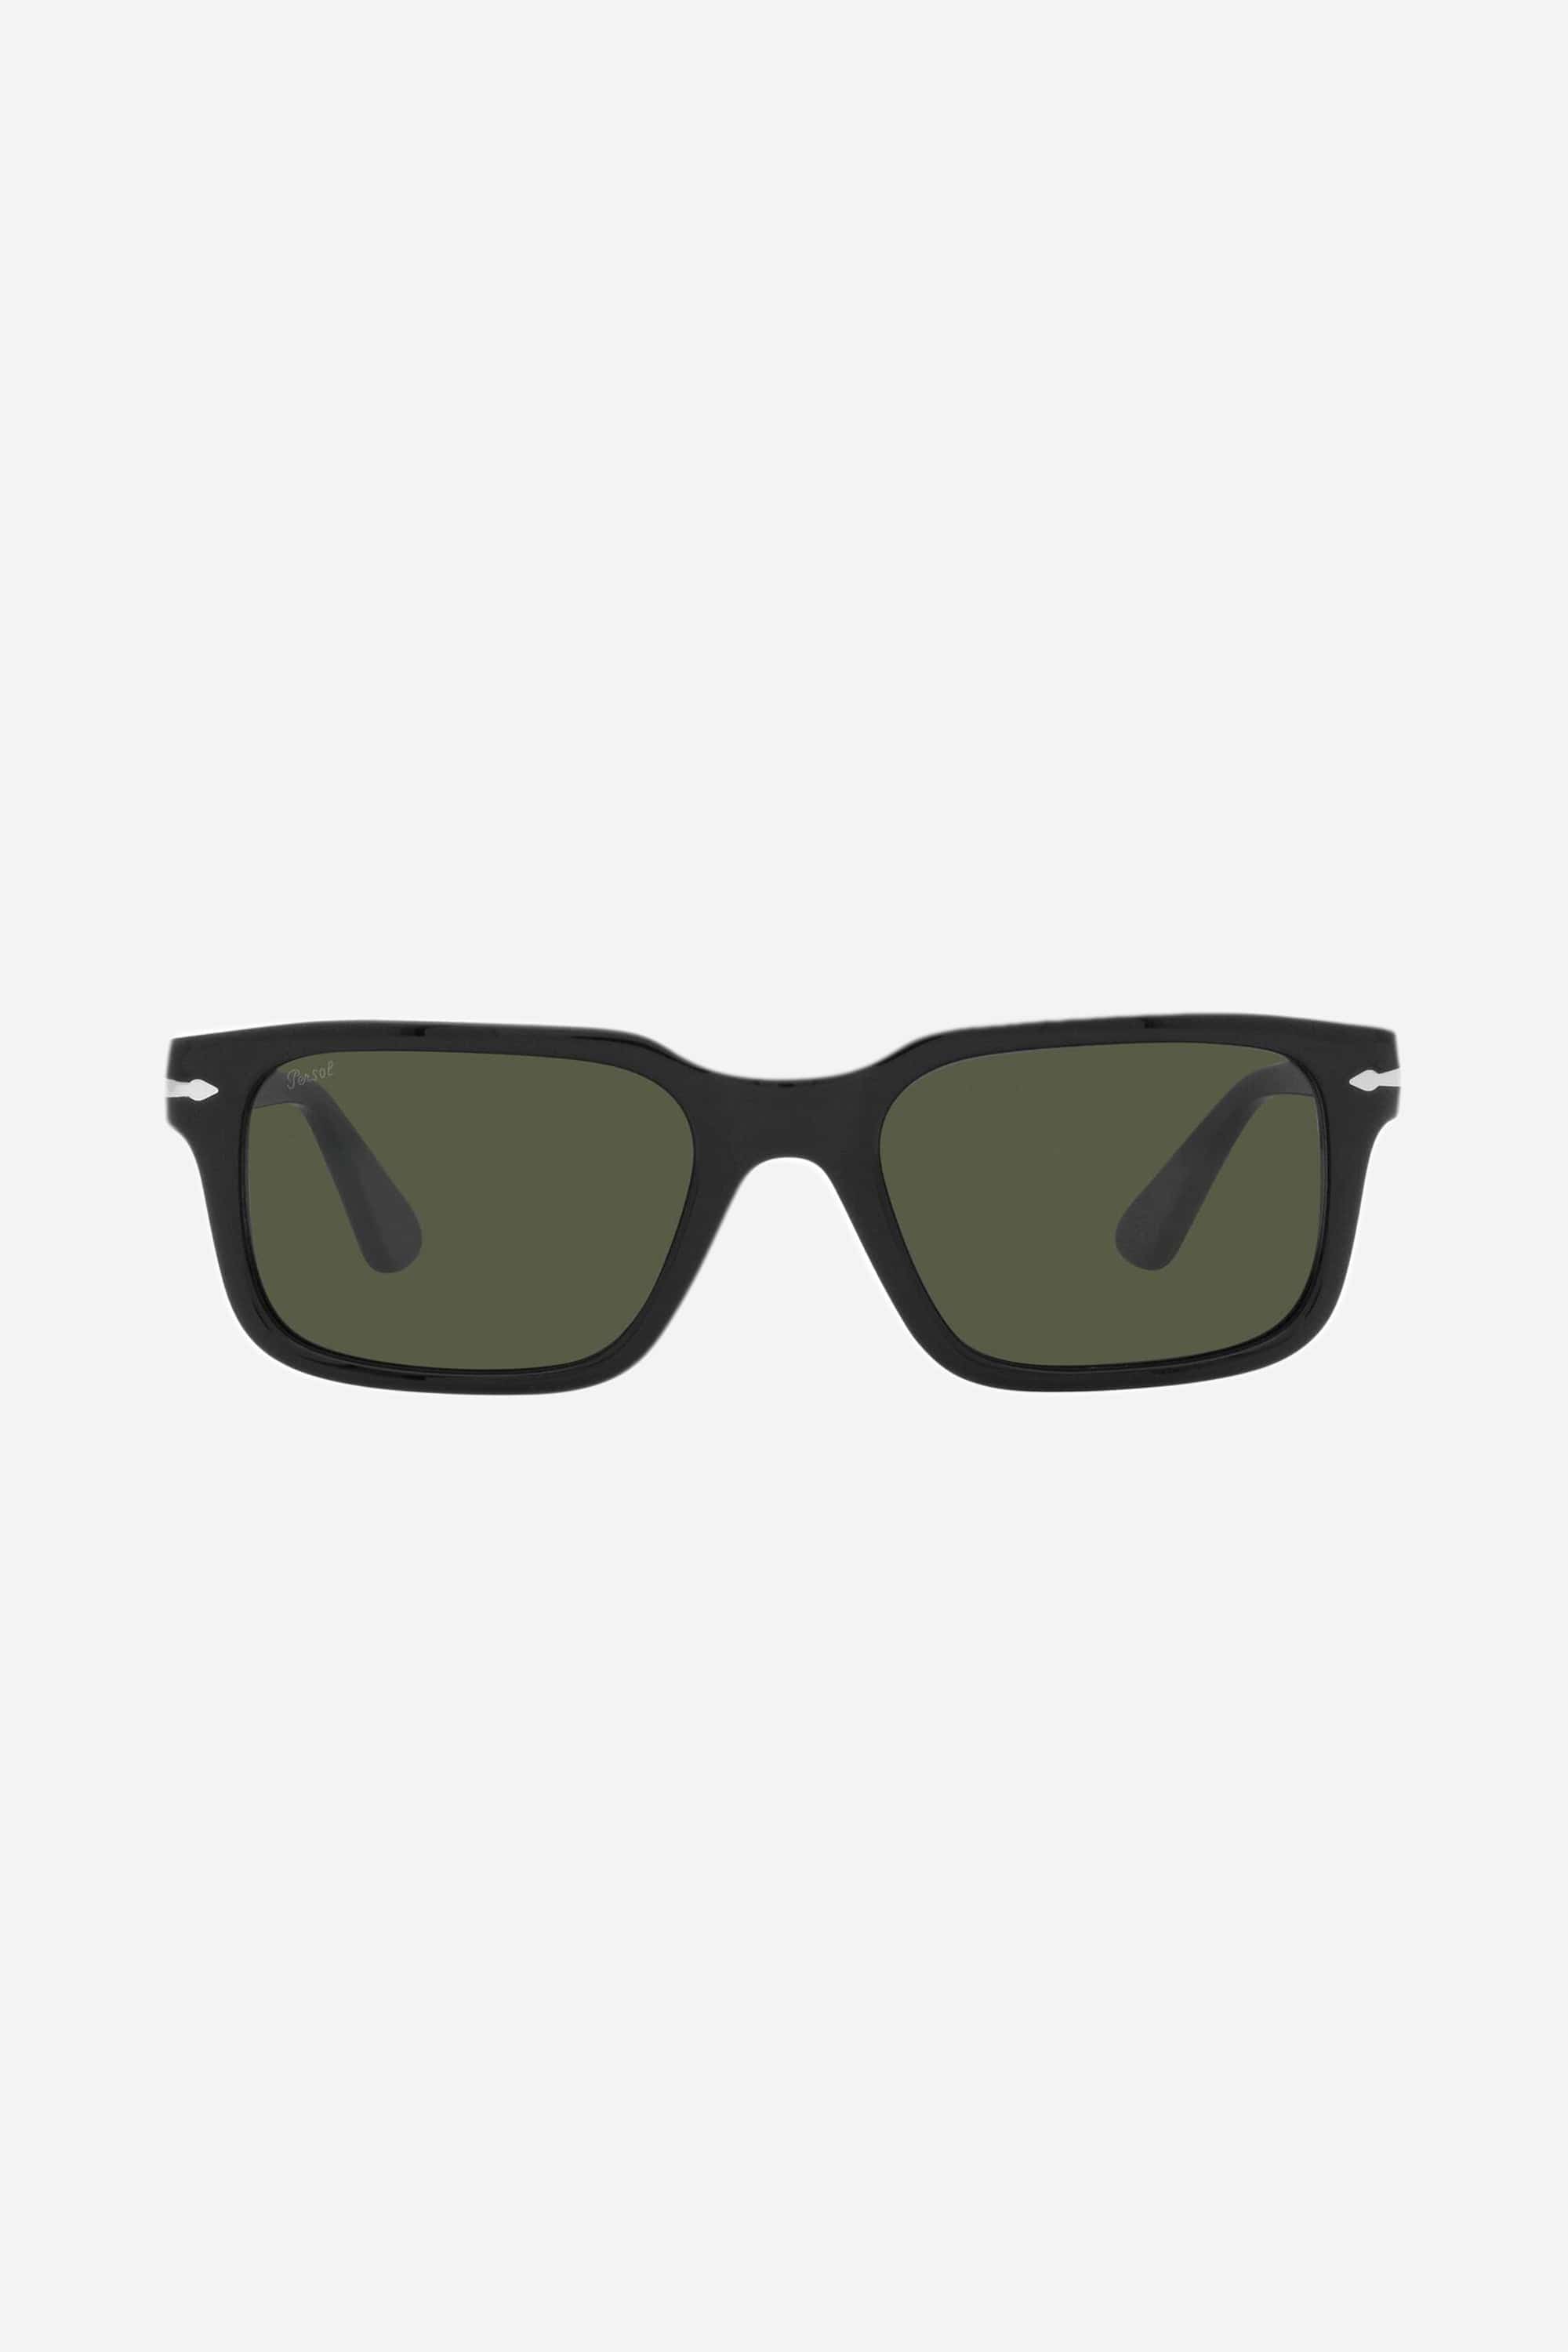 Persol squared black sunglasses - Eyewear Club